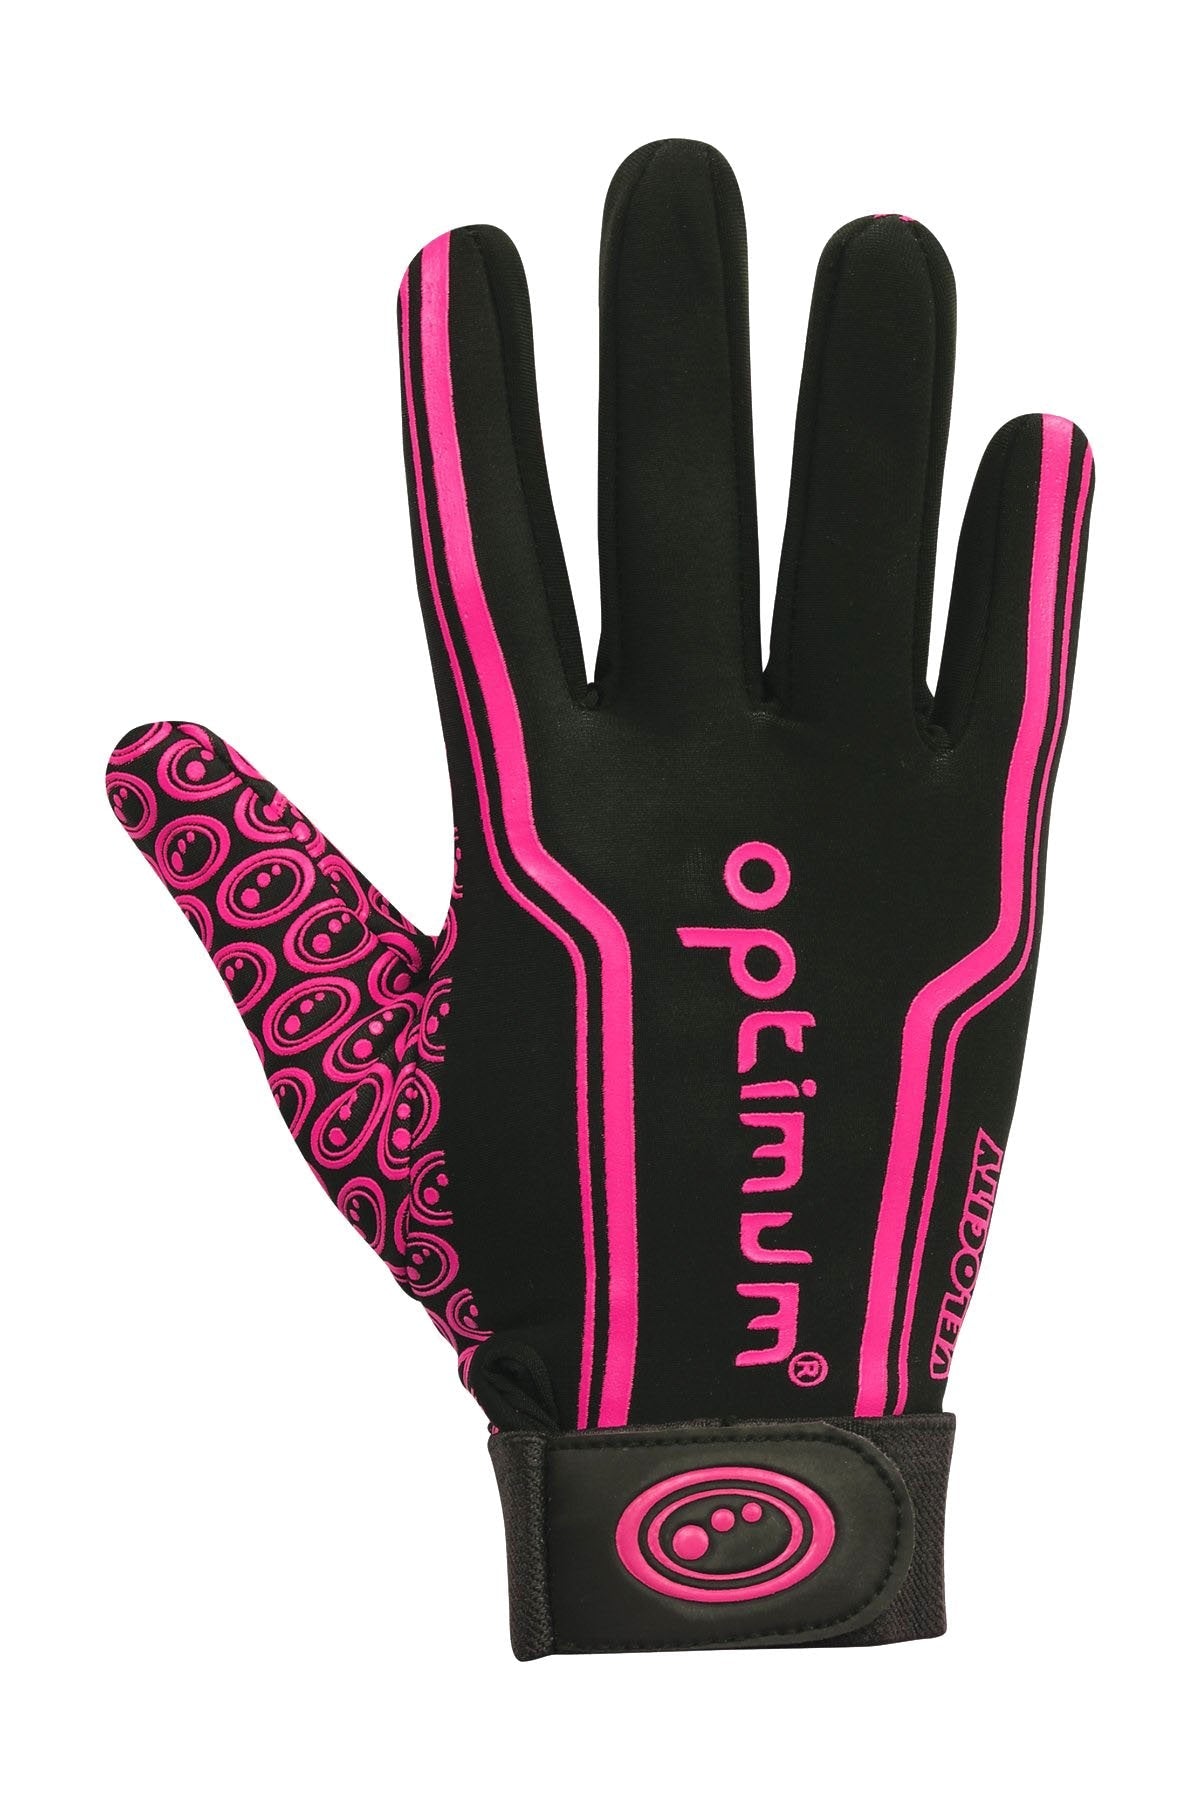 Optimum Velocity Junior Thermal Rugby Gloves - Pink